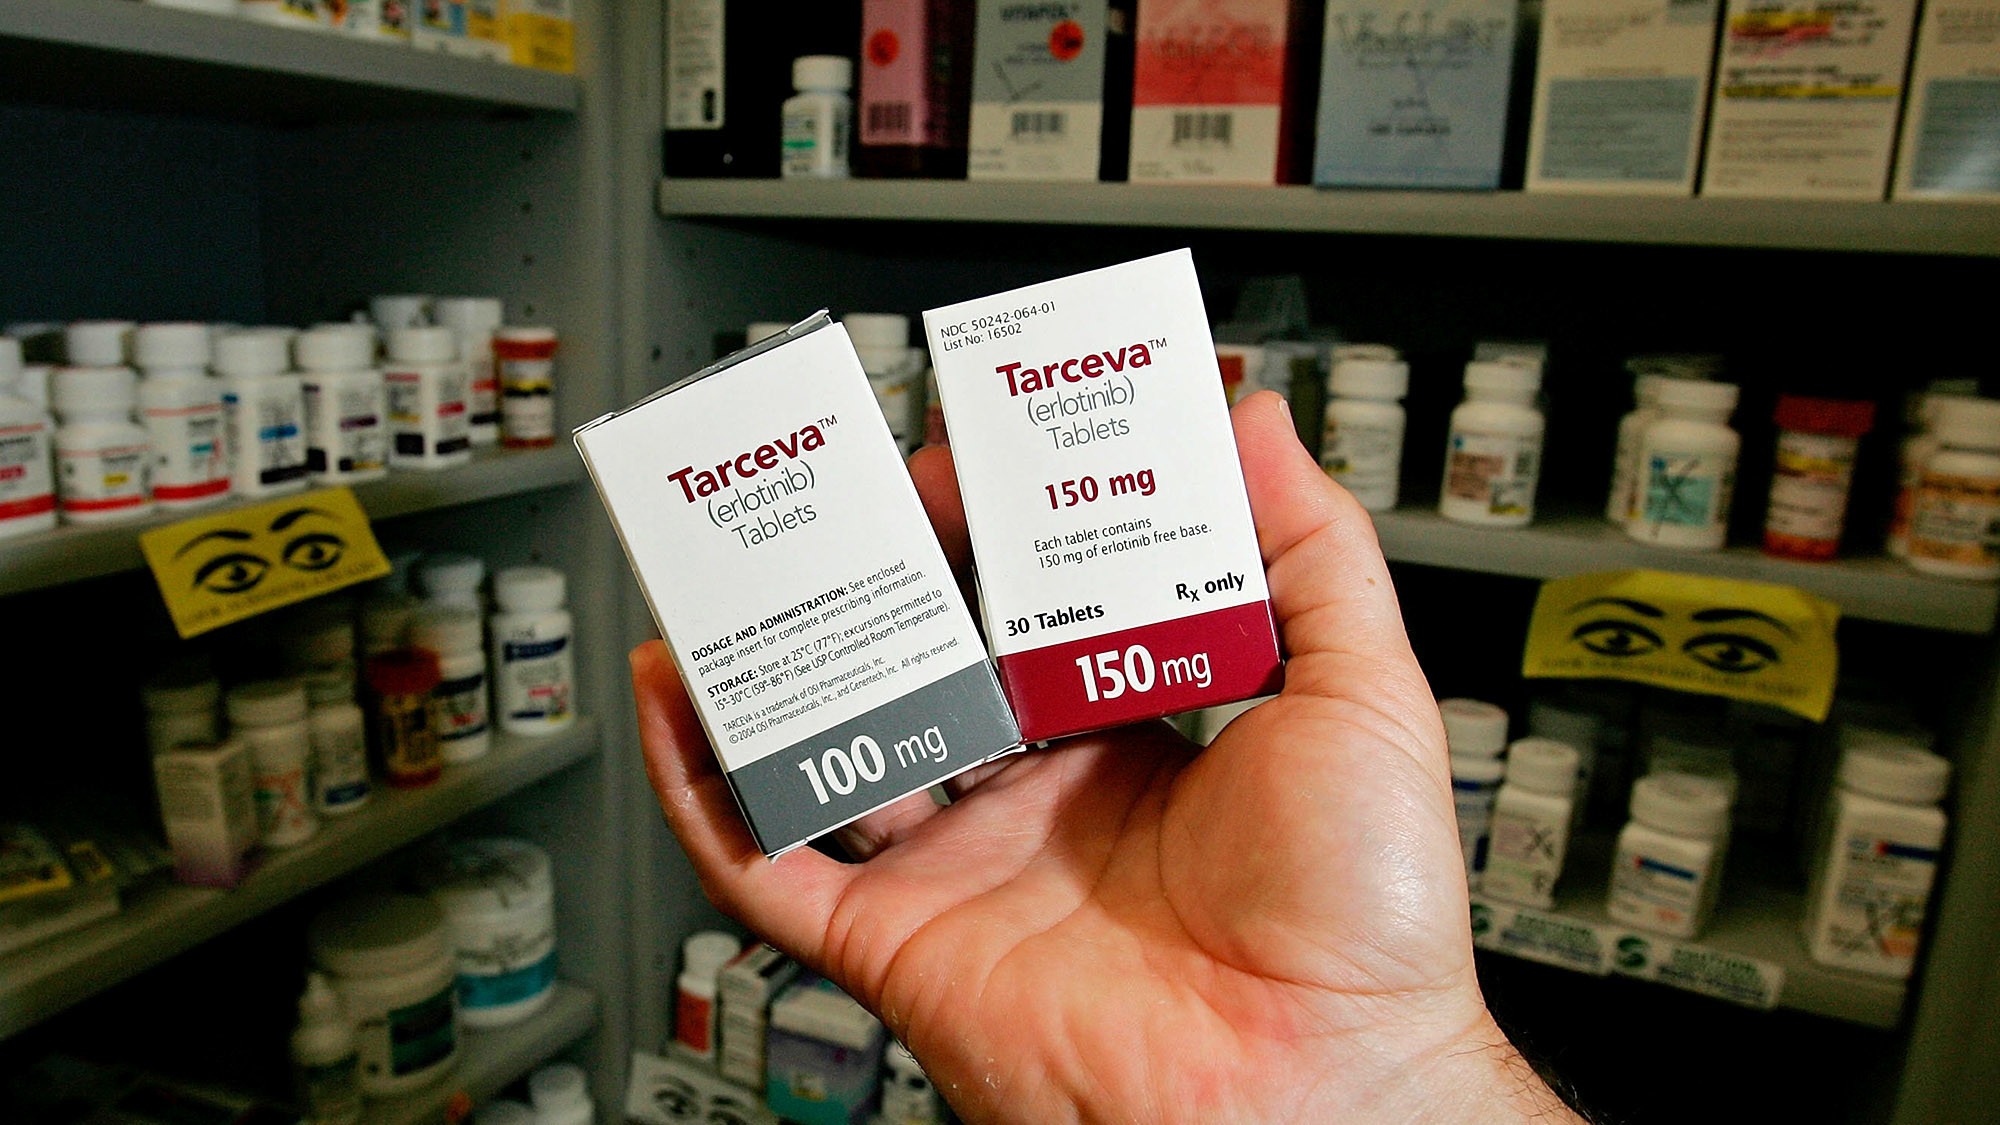 Tarceva packages at Johns Hopkins Hospital in 2005.